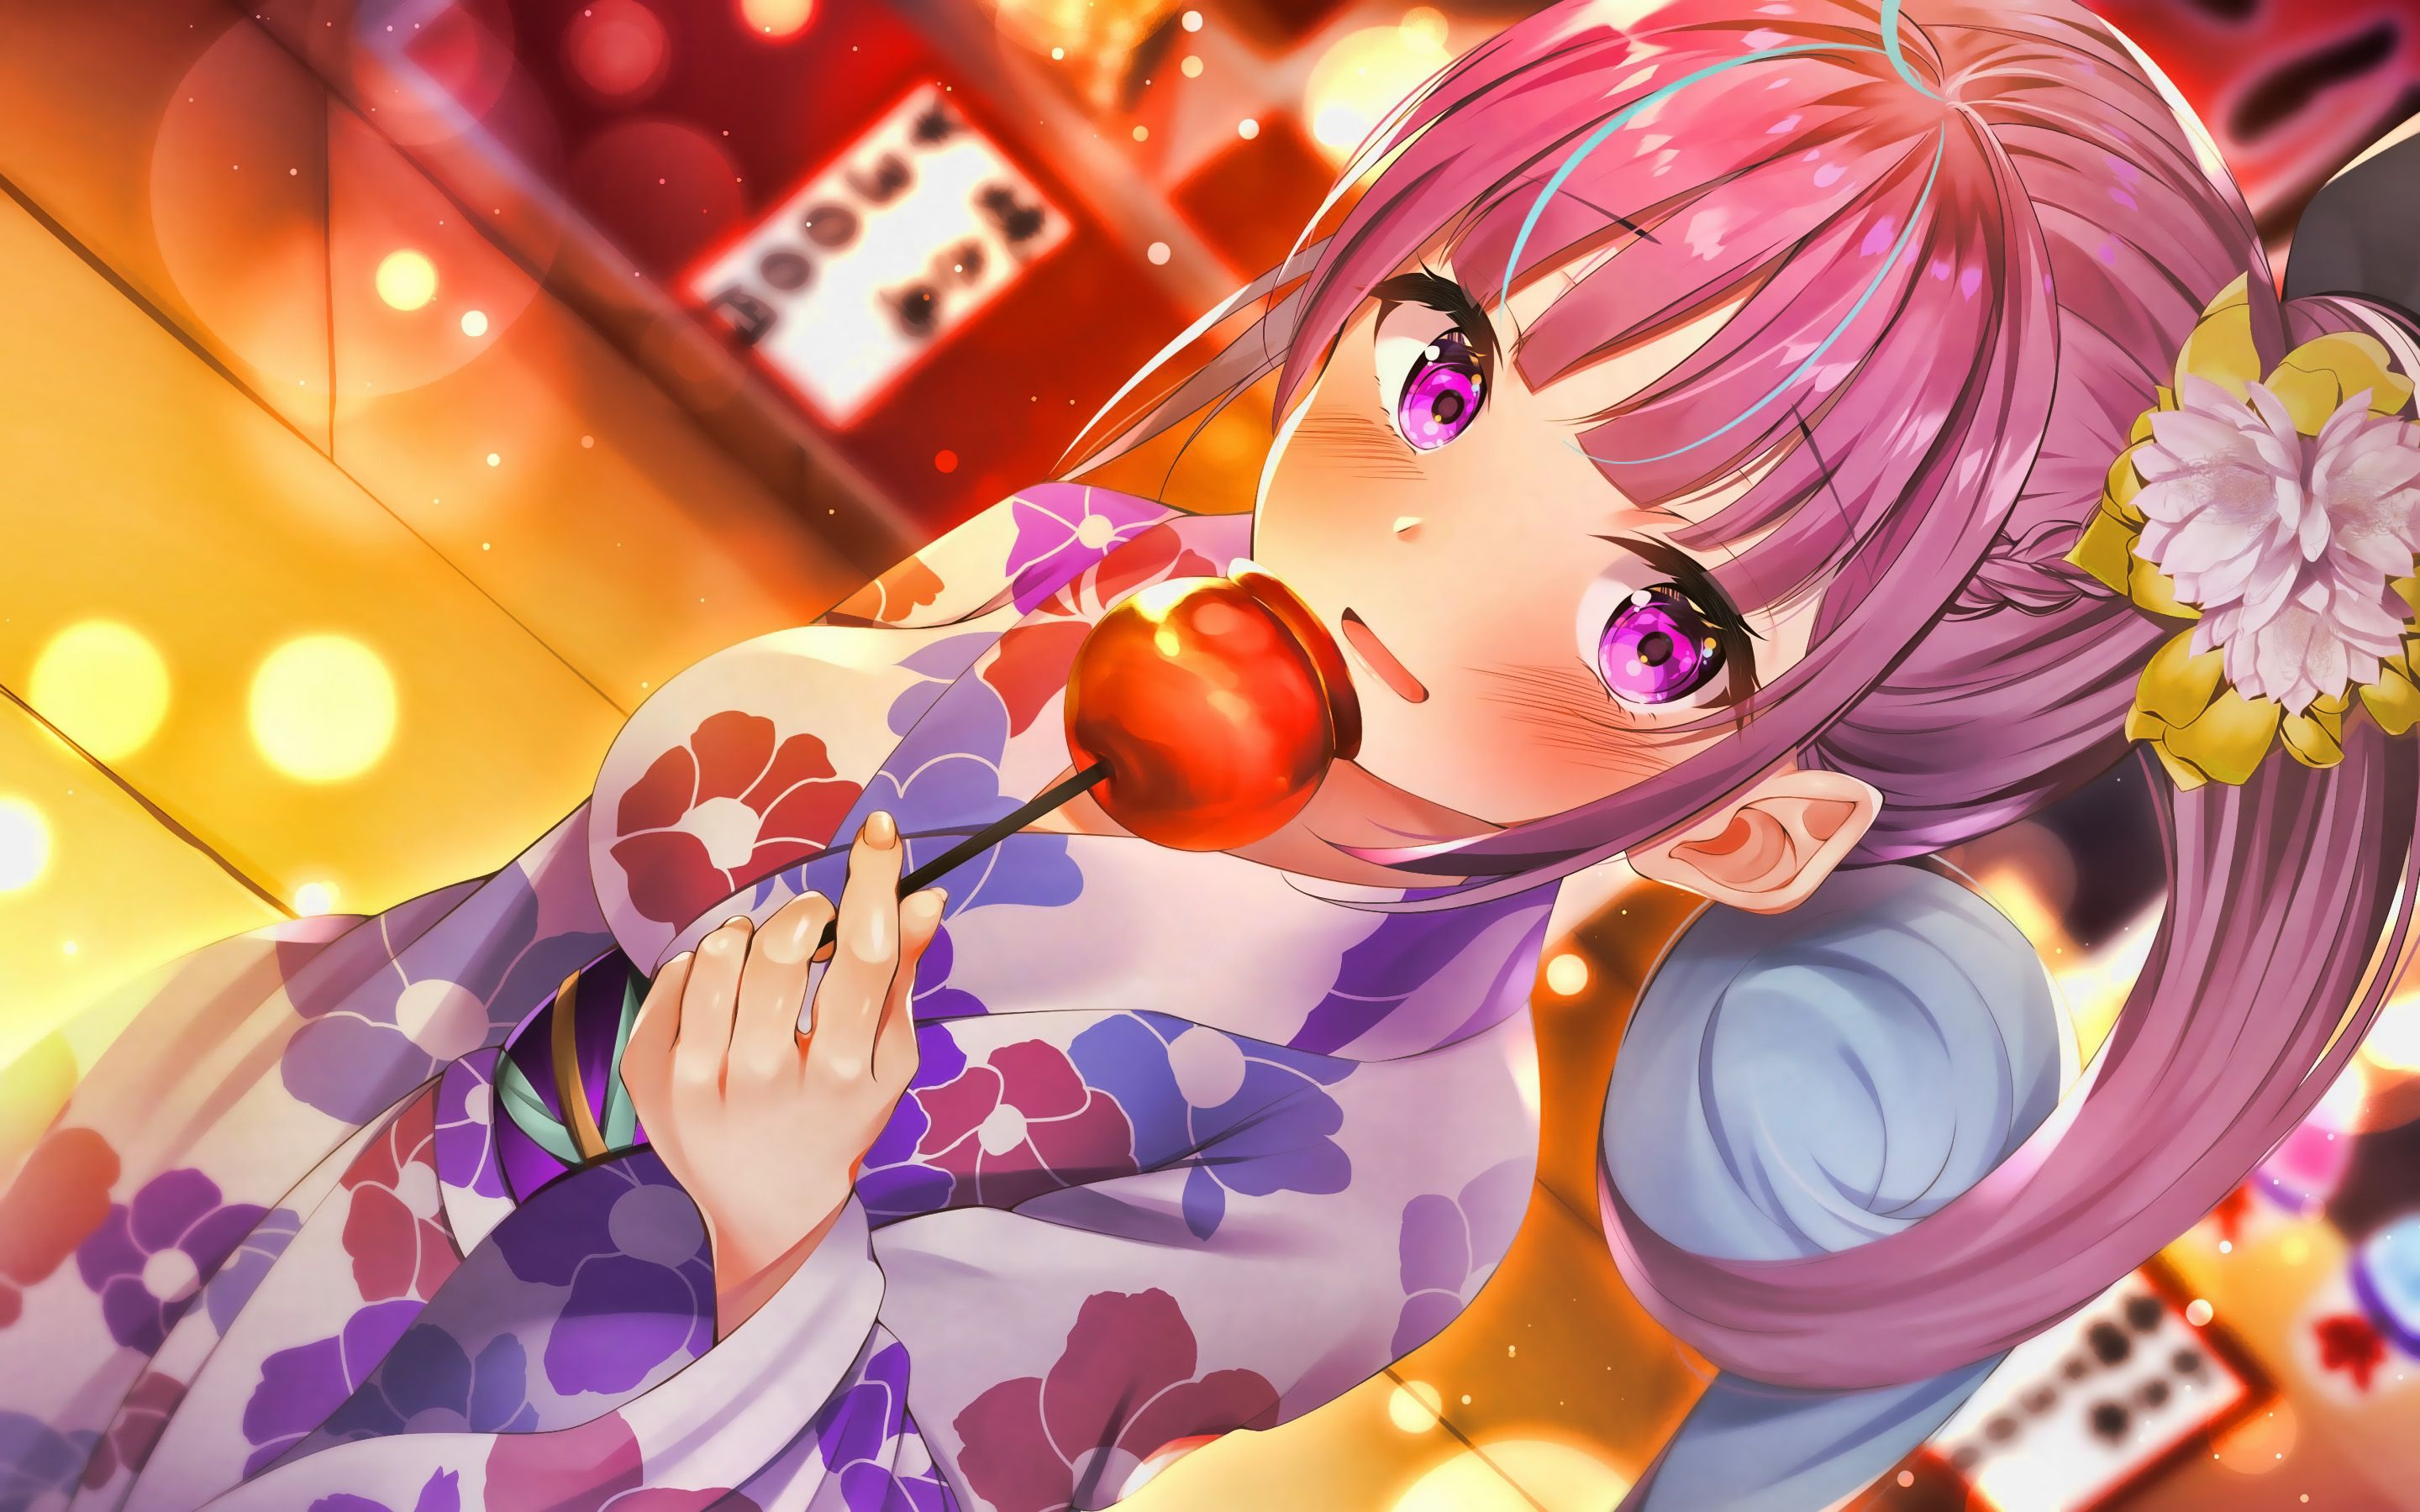 Download wallpapers Minato Aqua, girl with pink hair, kimono.